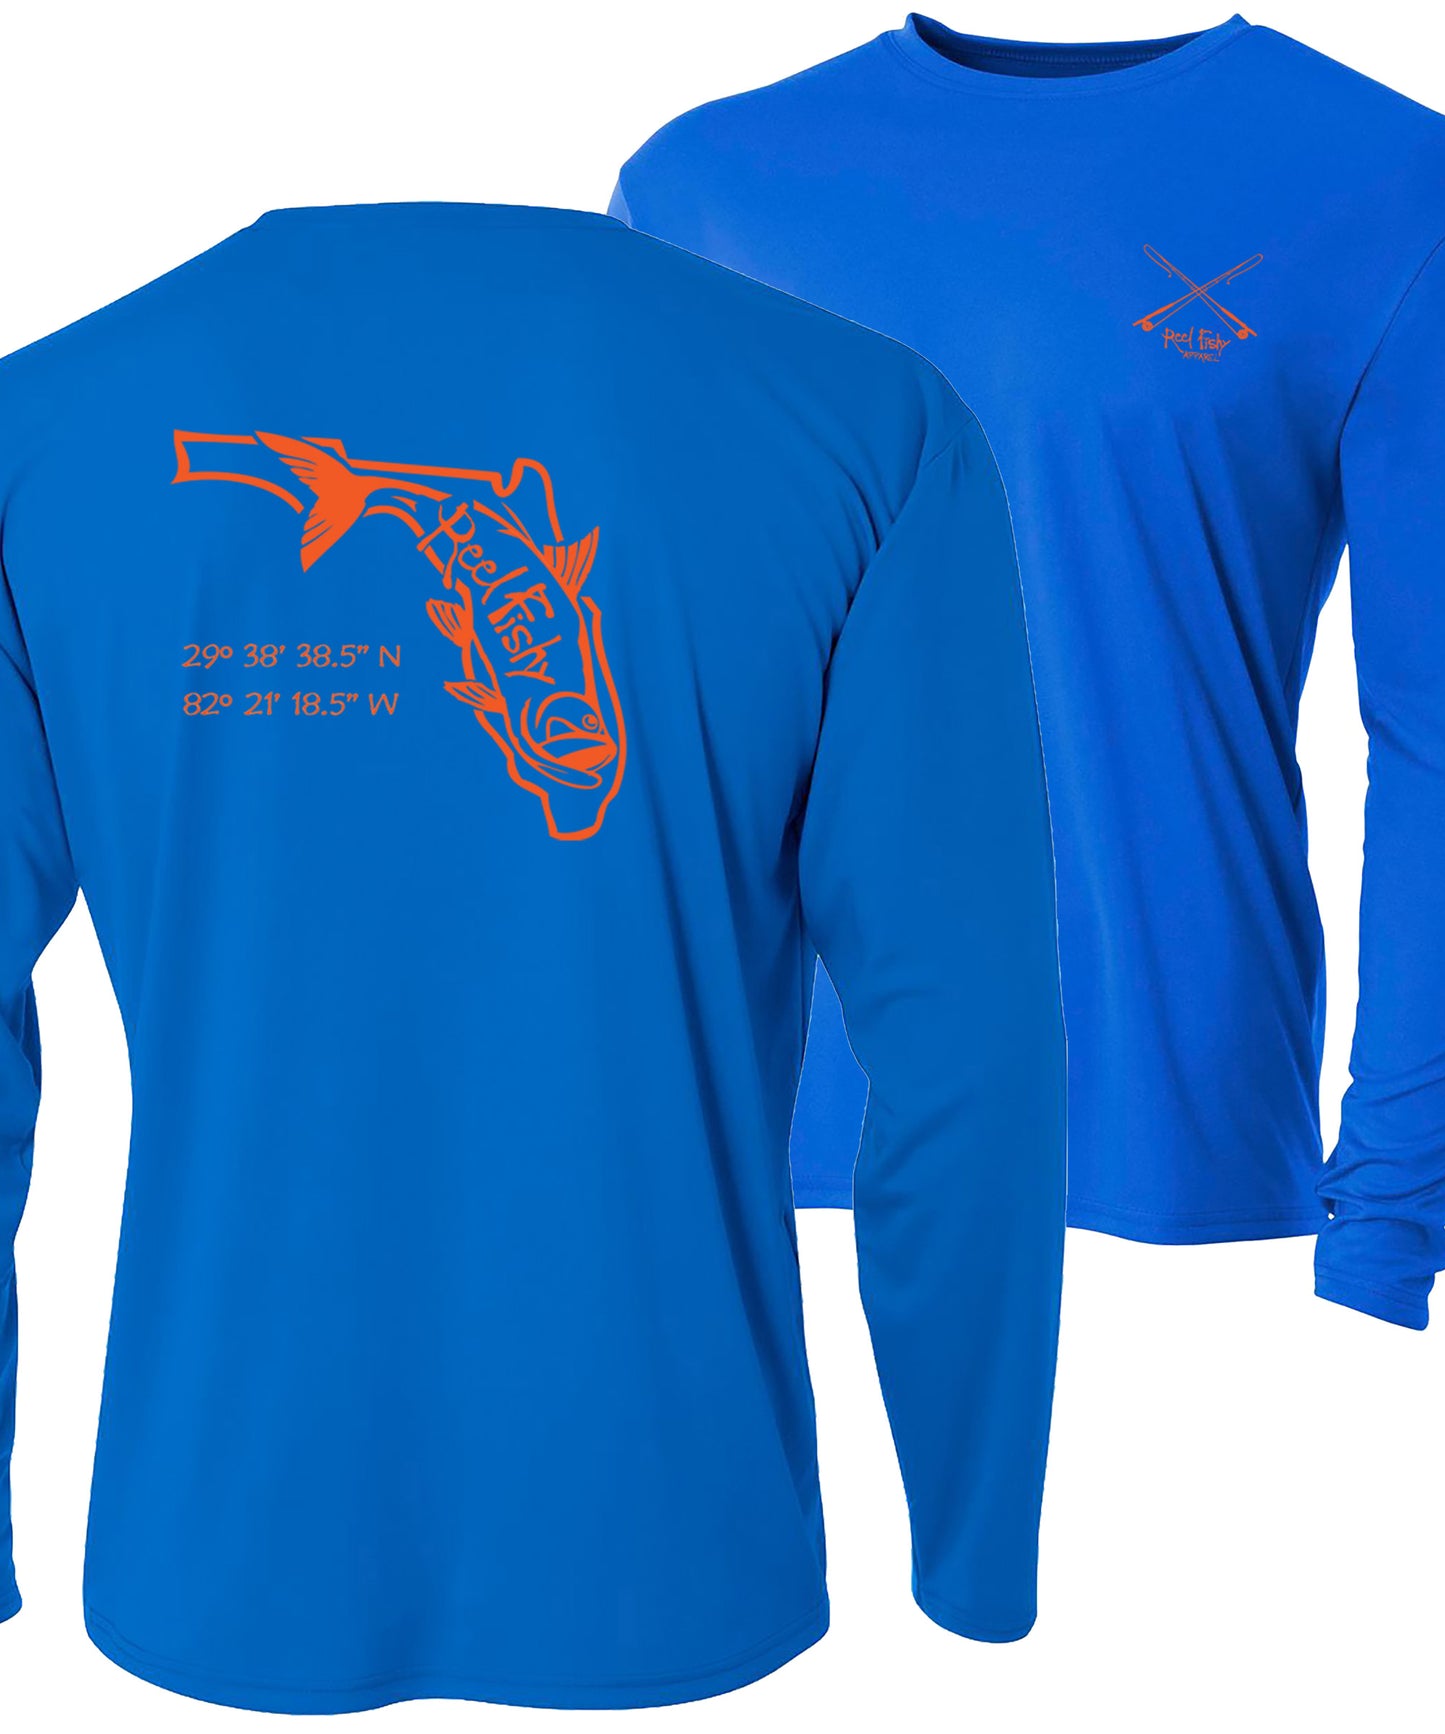 Royal/Orange Tarpon State of FL Team Performance Shirts 50+UV Sun Protection Long Sleeves